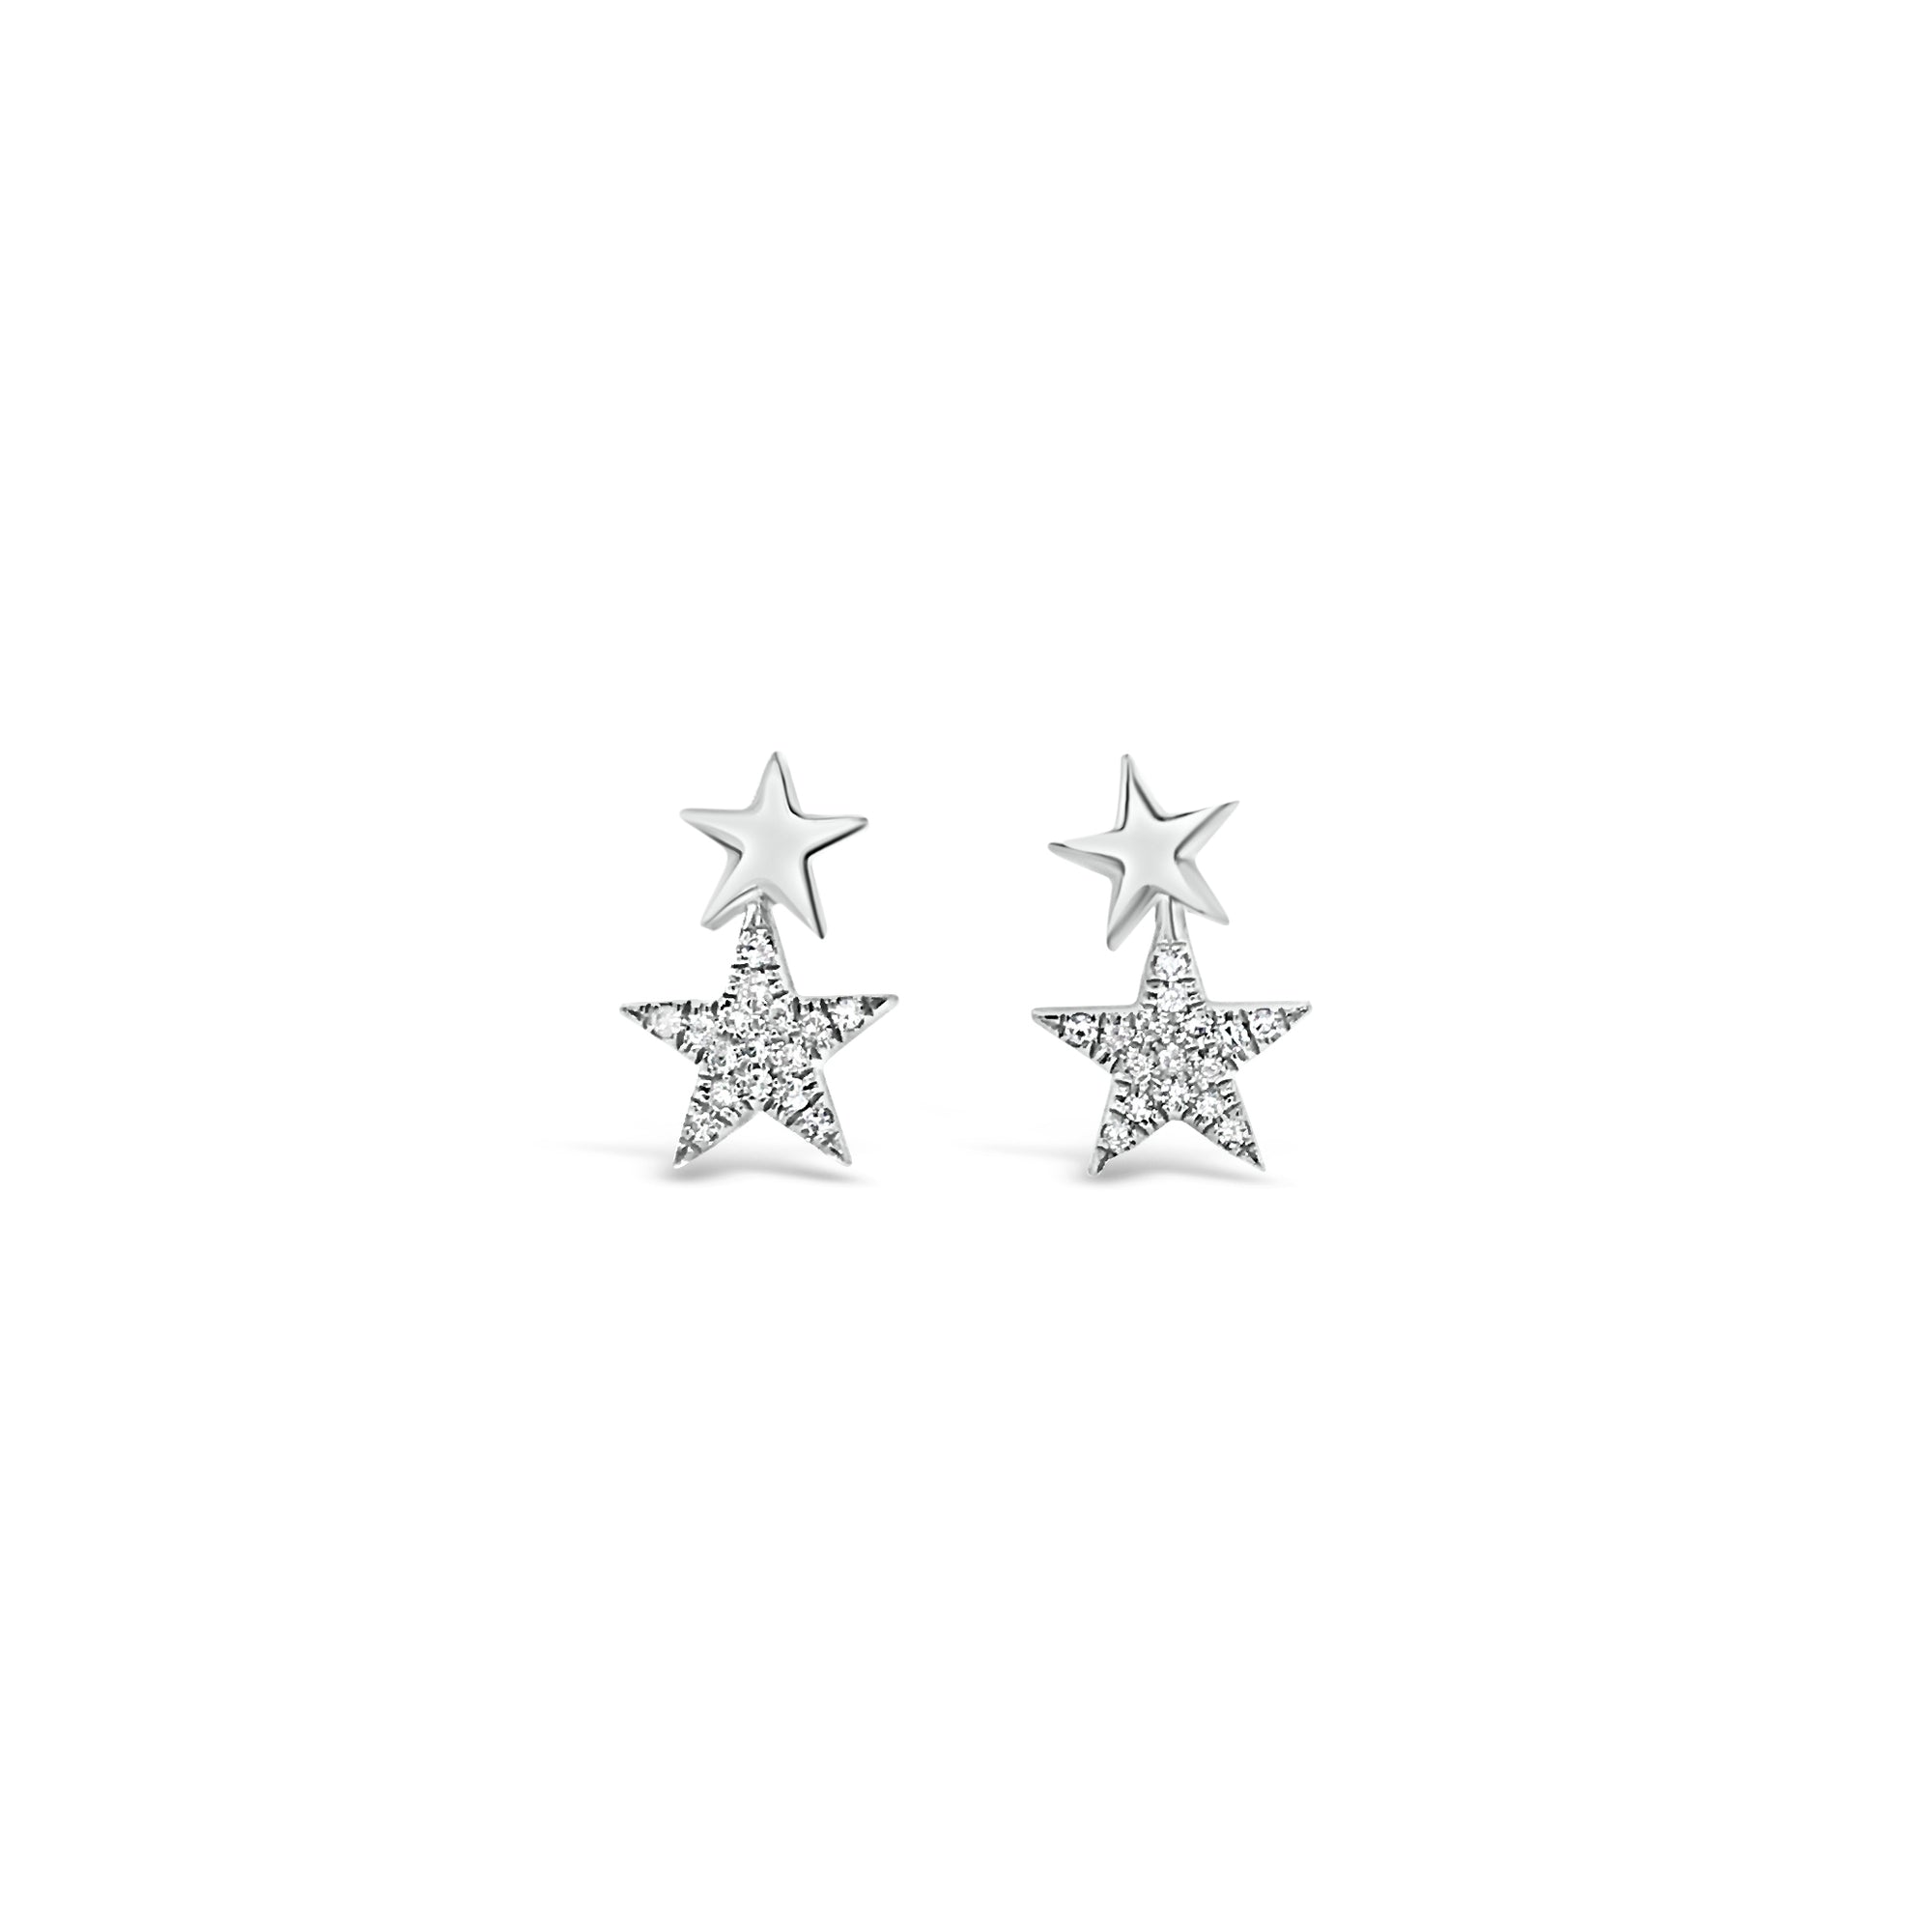 Diamond & Gold Star Crawler Earrings -14K white gold weighing 1.76 grams -32 round diamonds totaling 0.07 carats